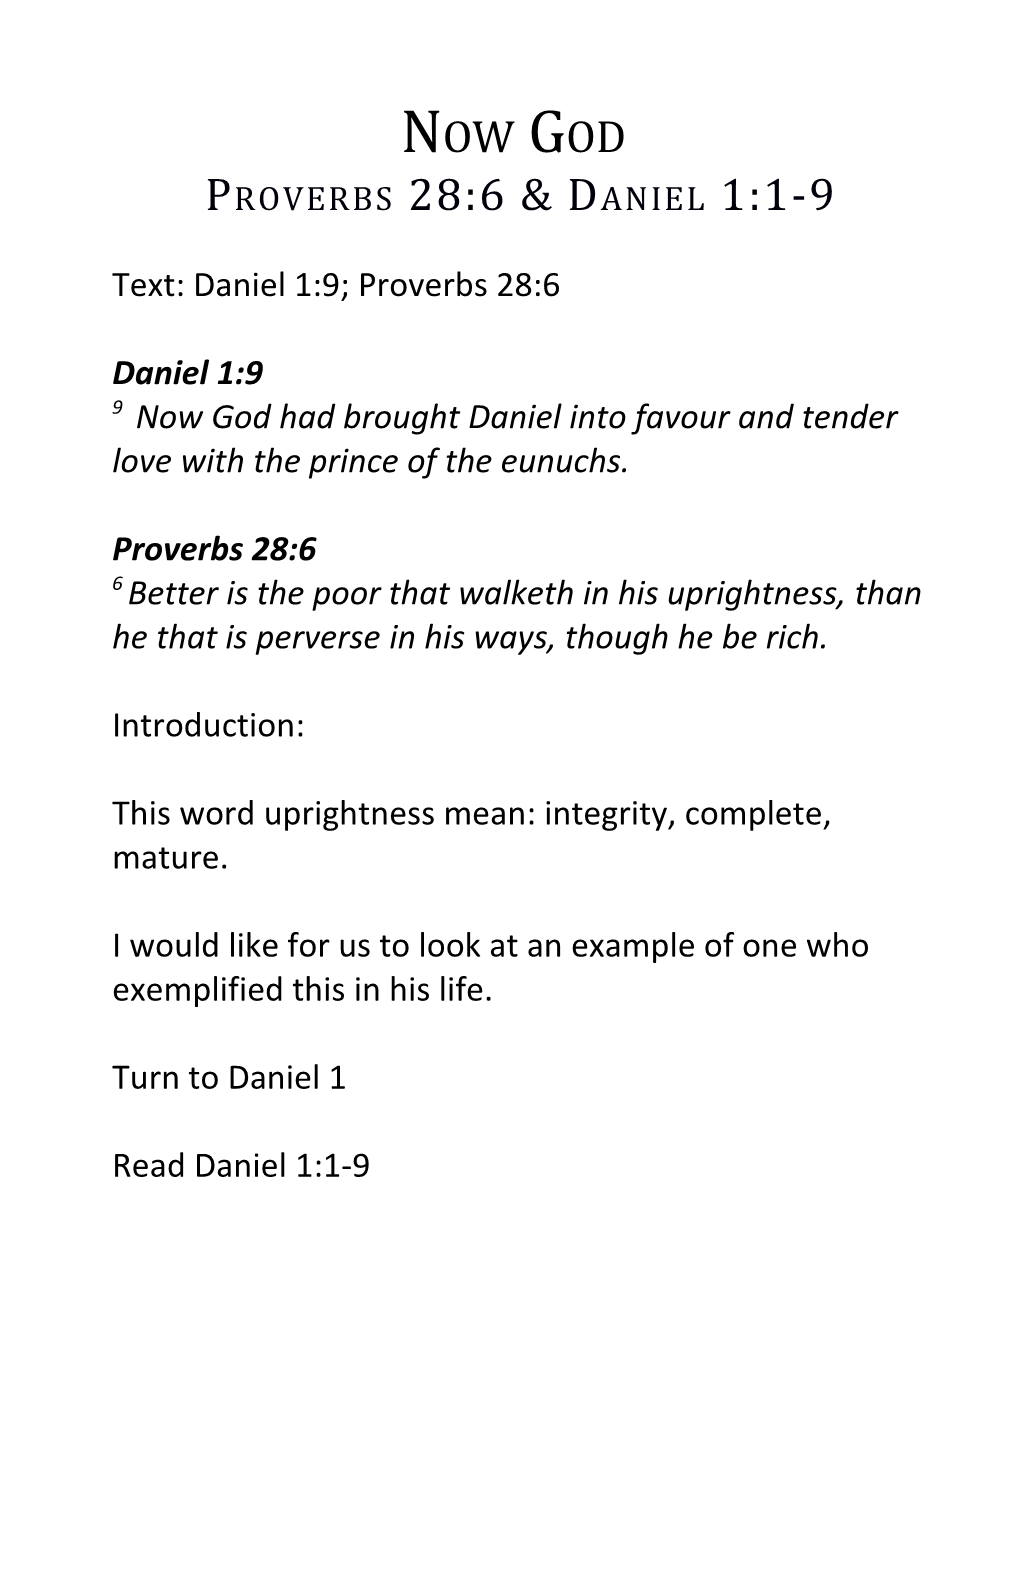 Proverbs 28:6 & Daniel 1:1-9